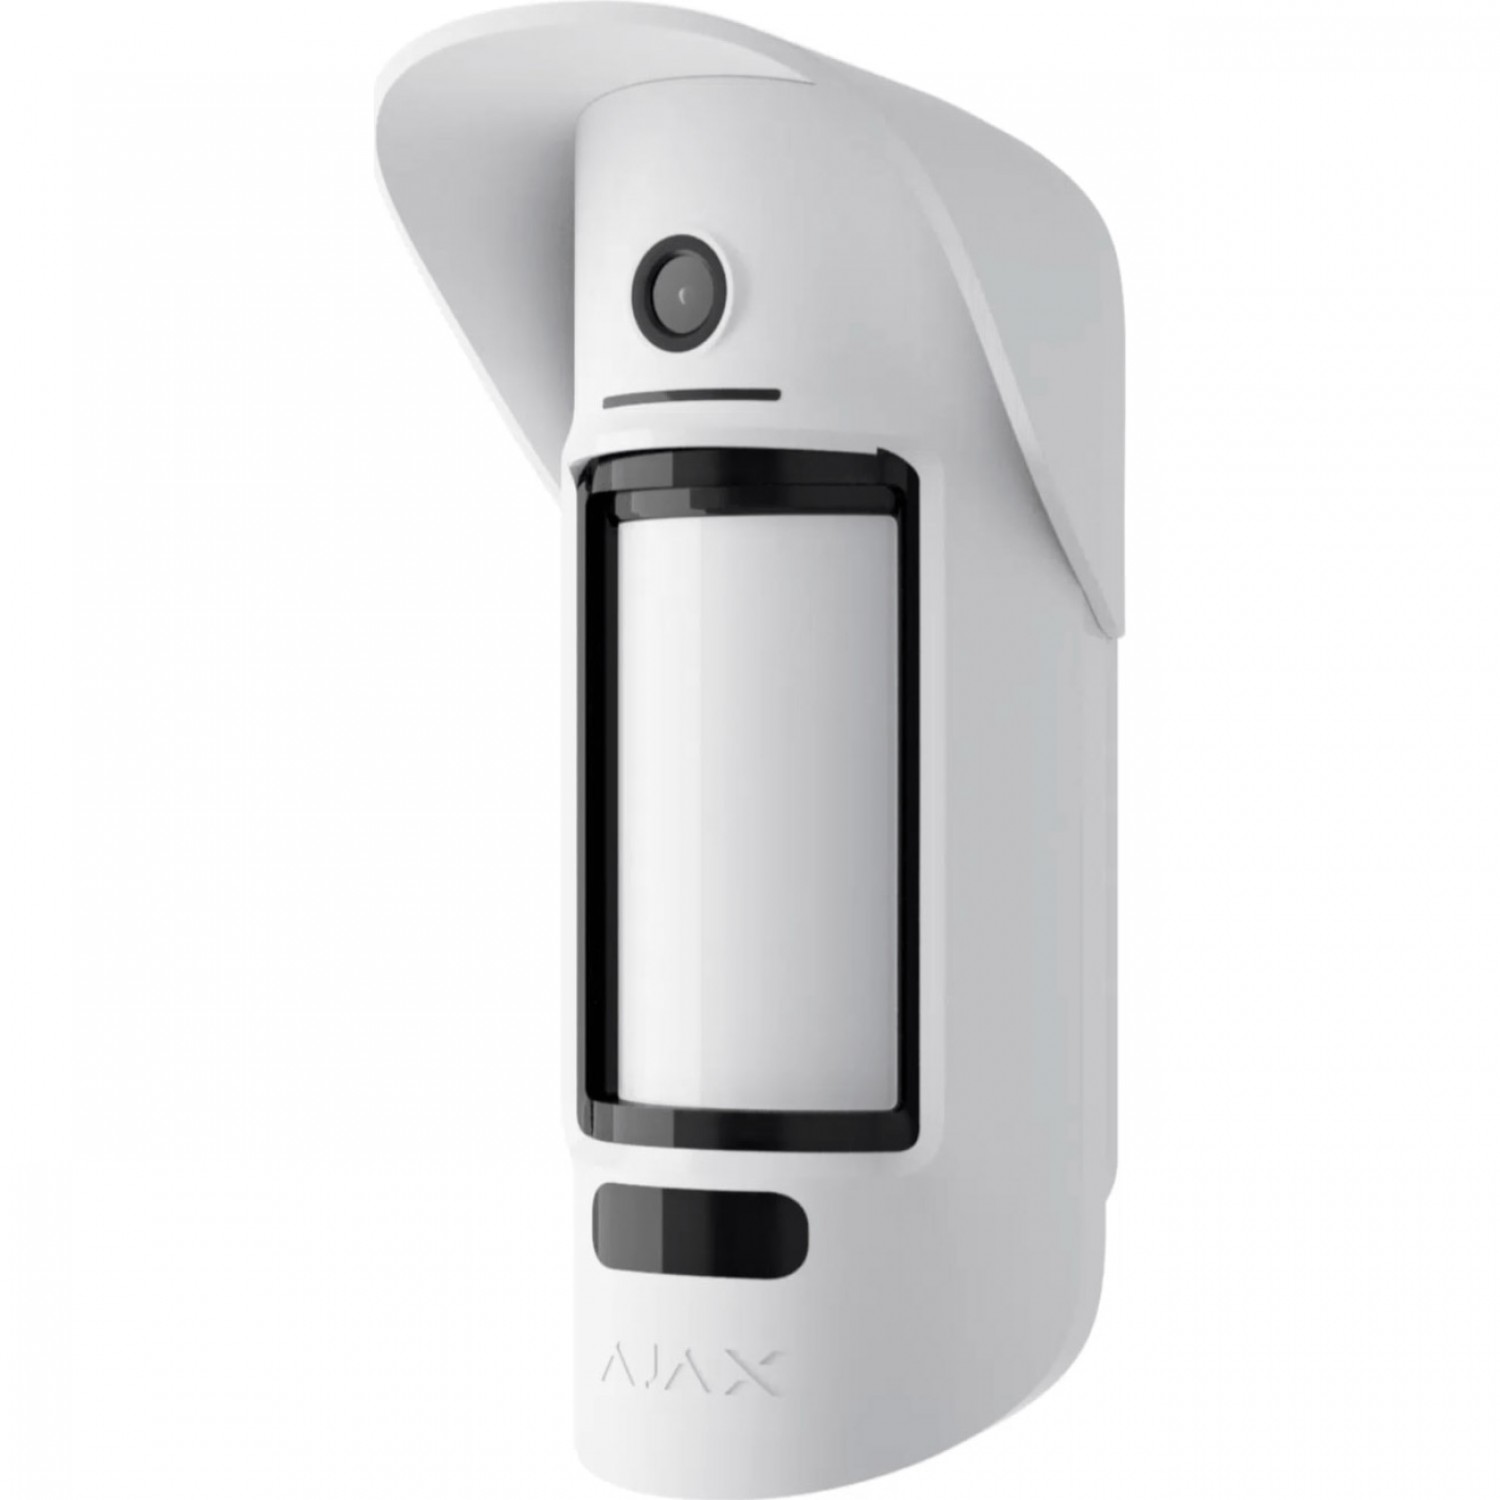 alt_image Ремонтний комплект Ajax RepairKit MotionCam Outdoor white датчик руху з камерою 25124